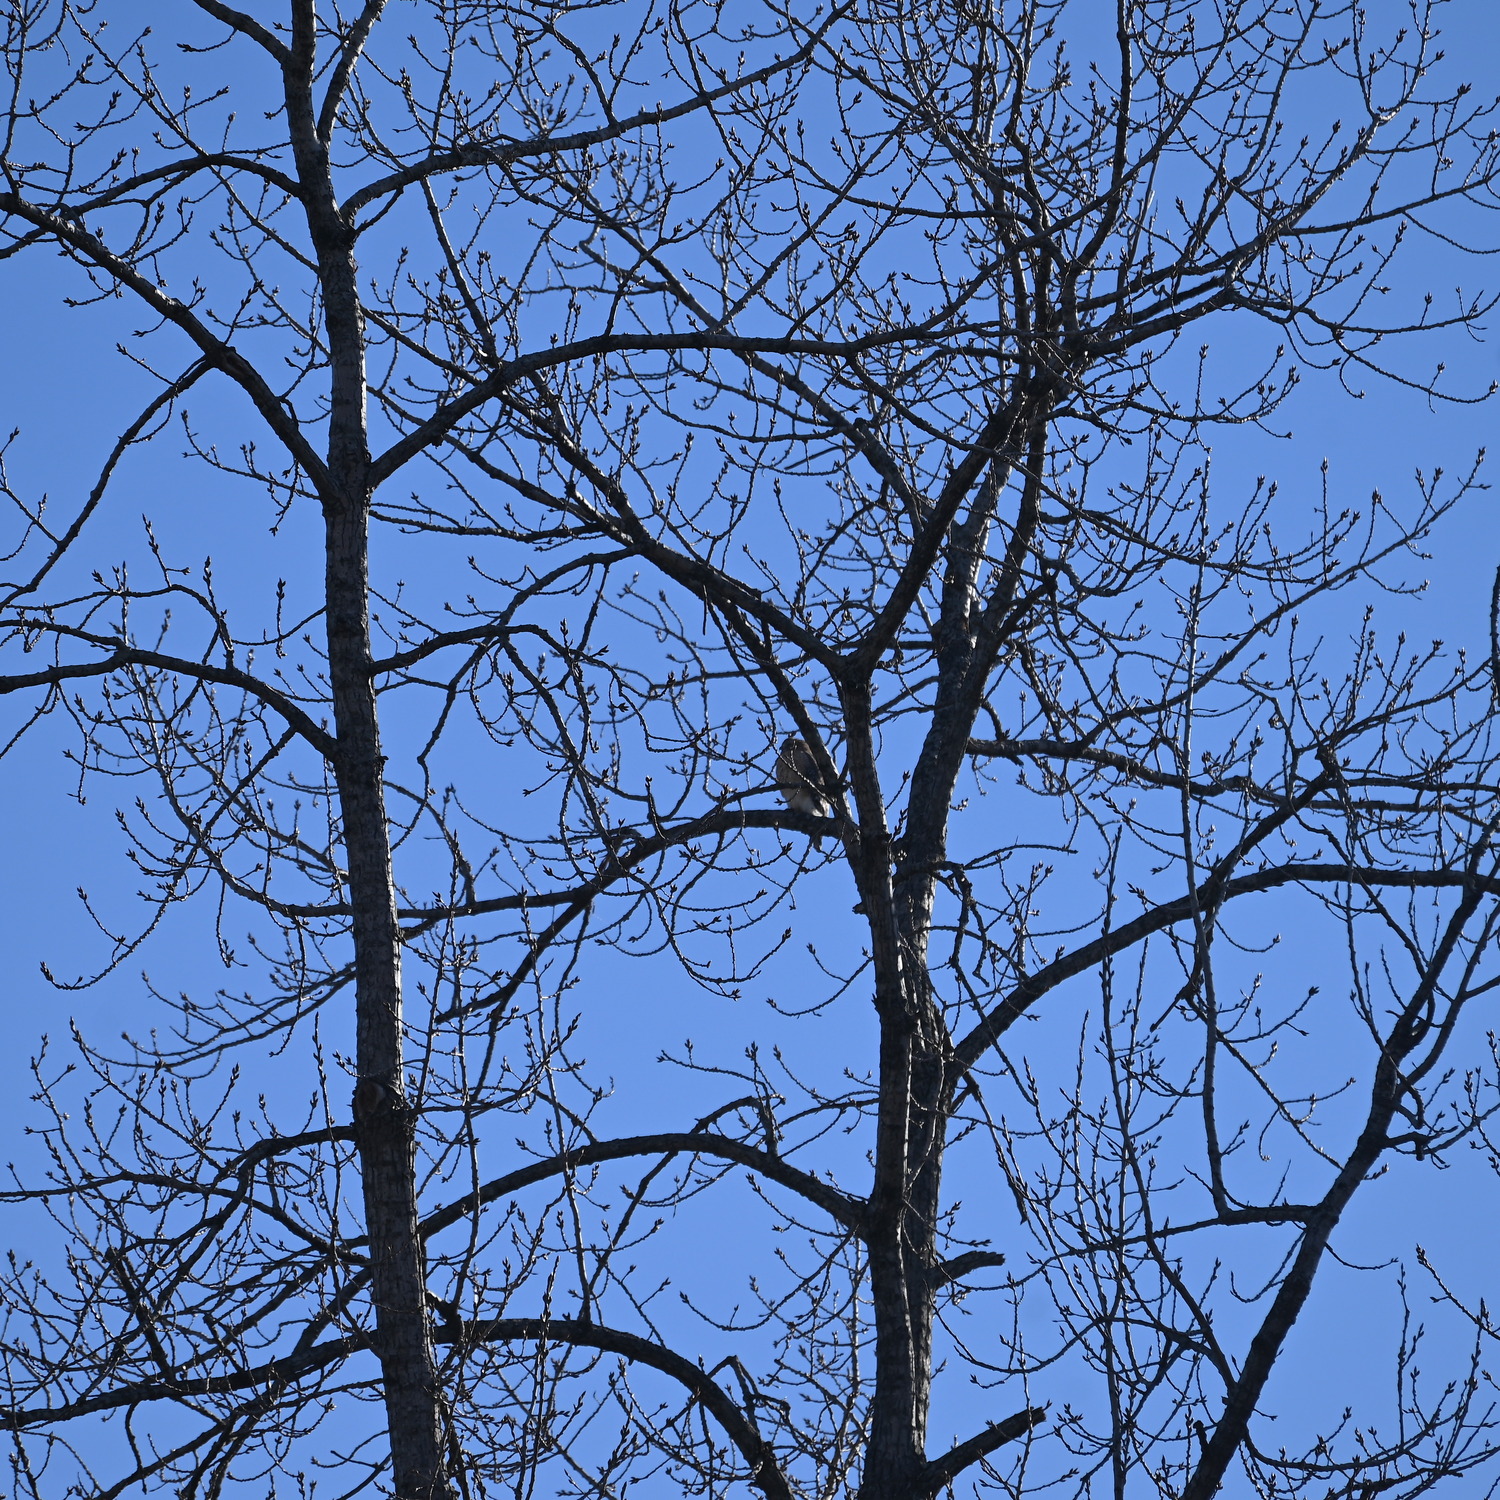 Owl at tree-top